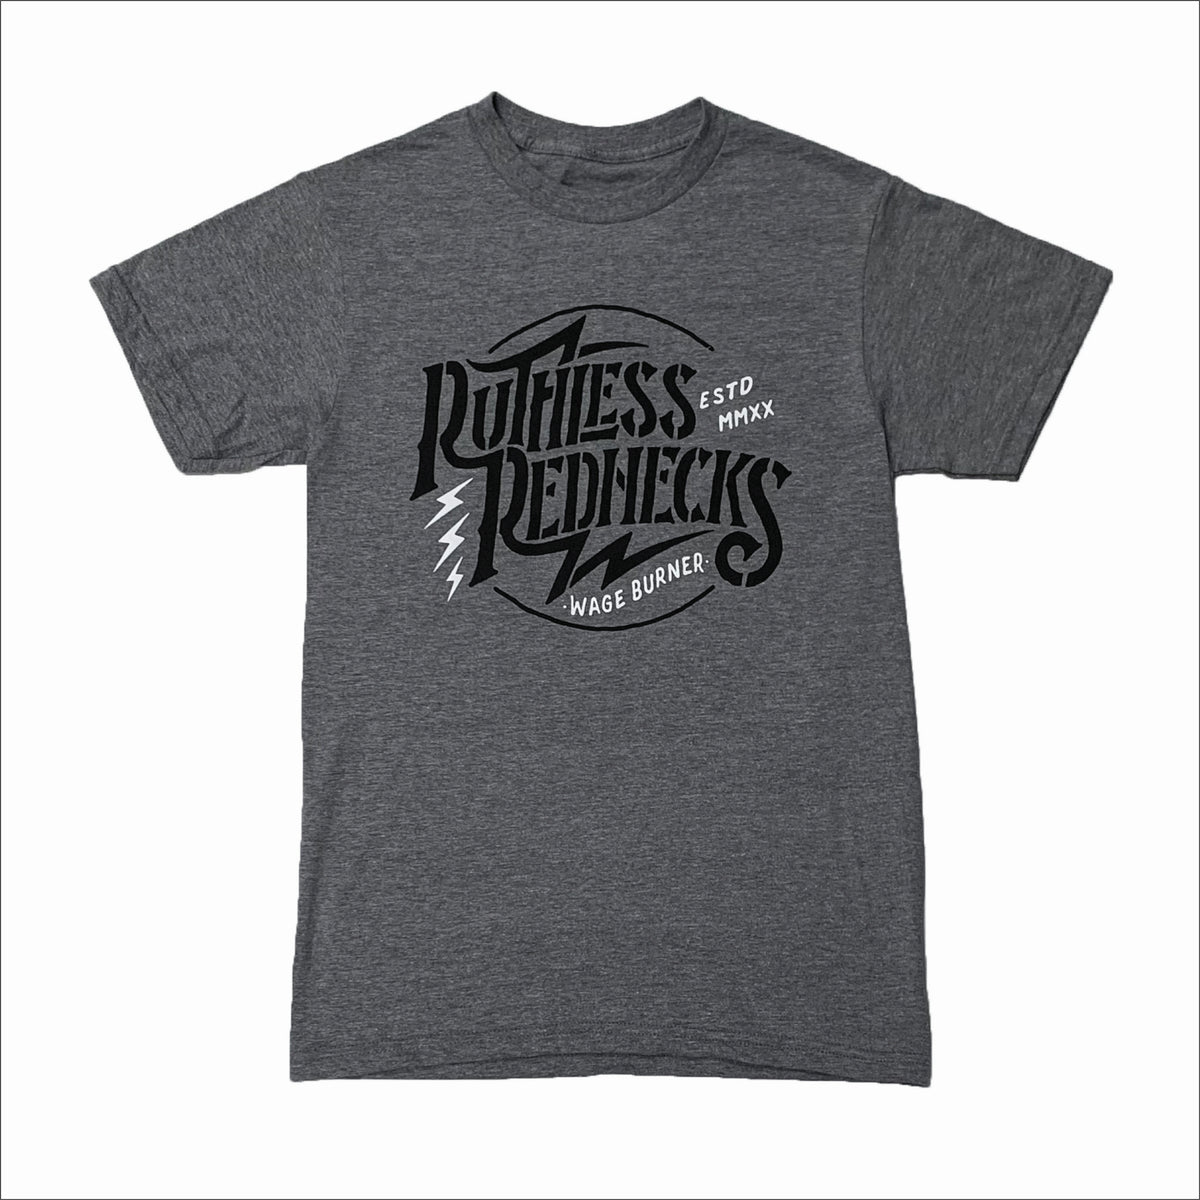 Wage Burner Short Sleeve Shirt | Ruthless Rednecks